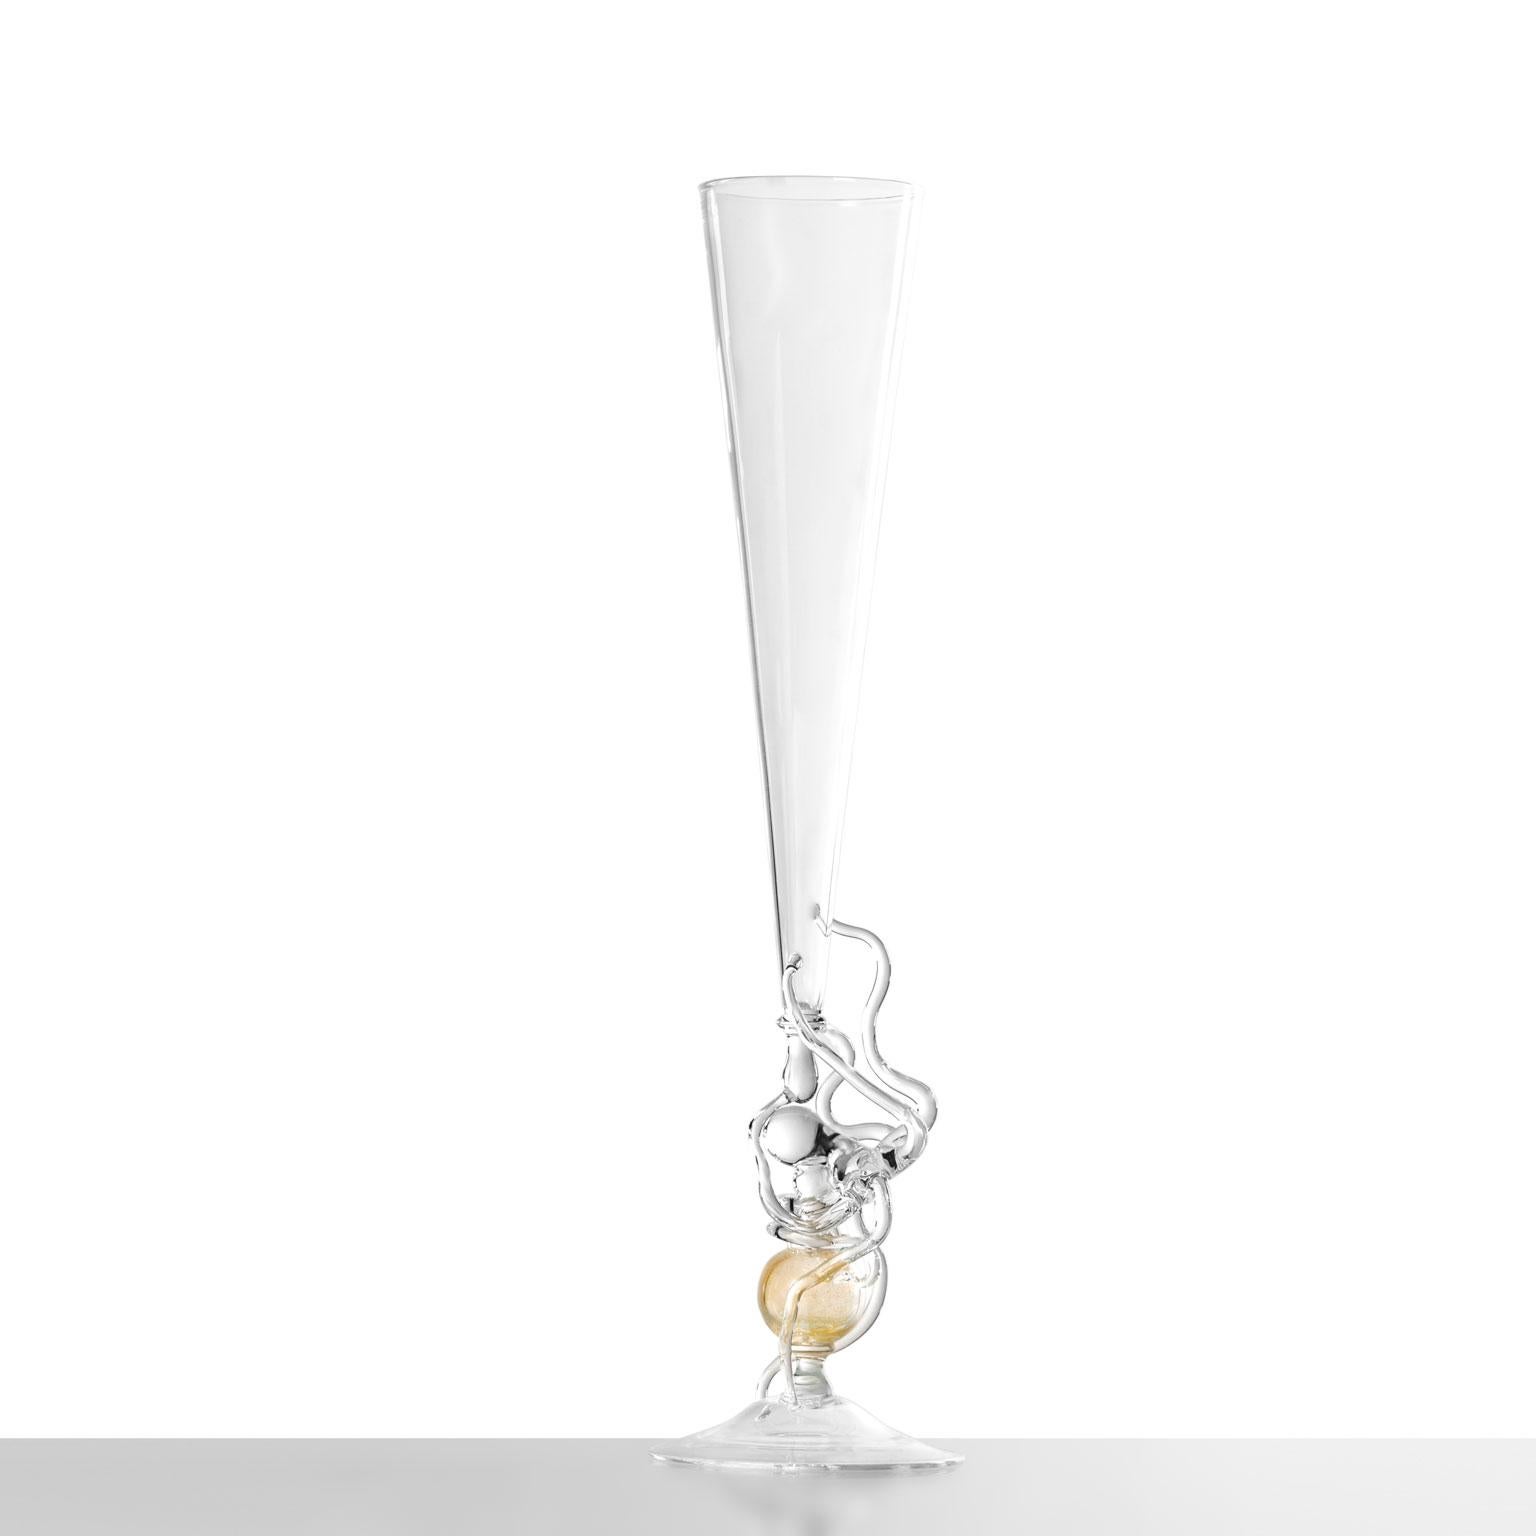 Modern Contemporary Leggerezza Hand-Blown Glass Sculptural Flute Gold leaf #05 For Sale